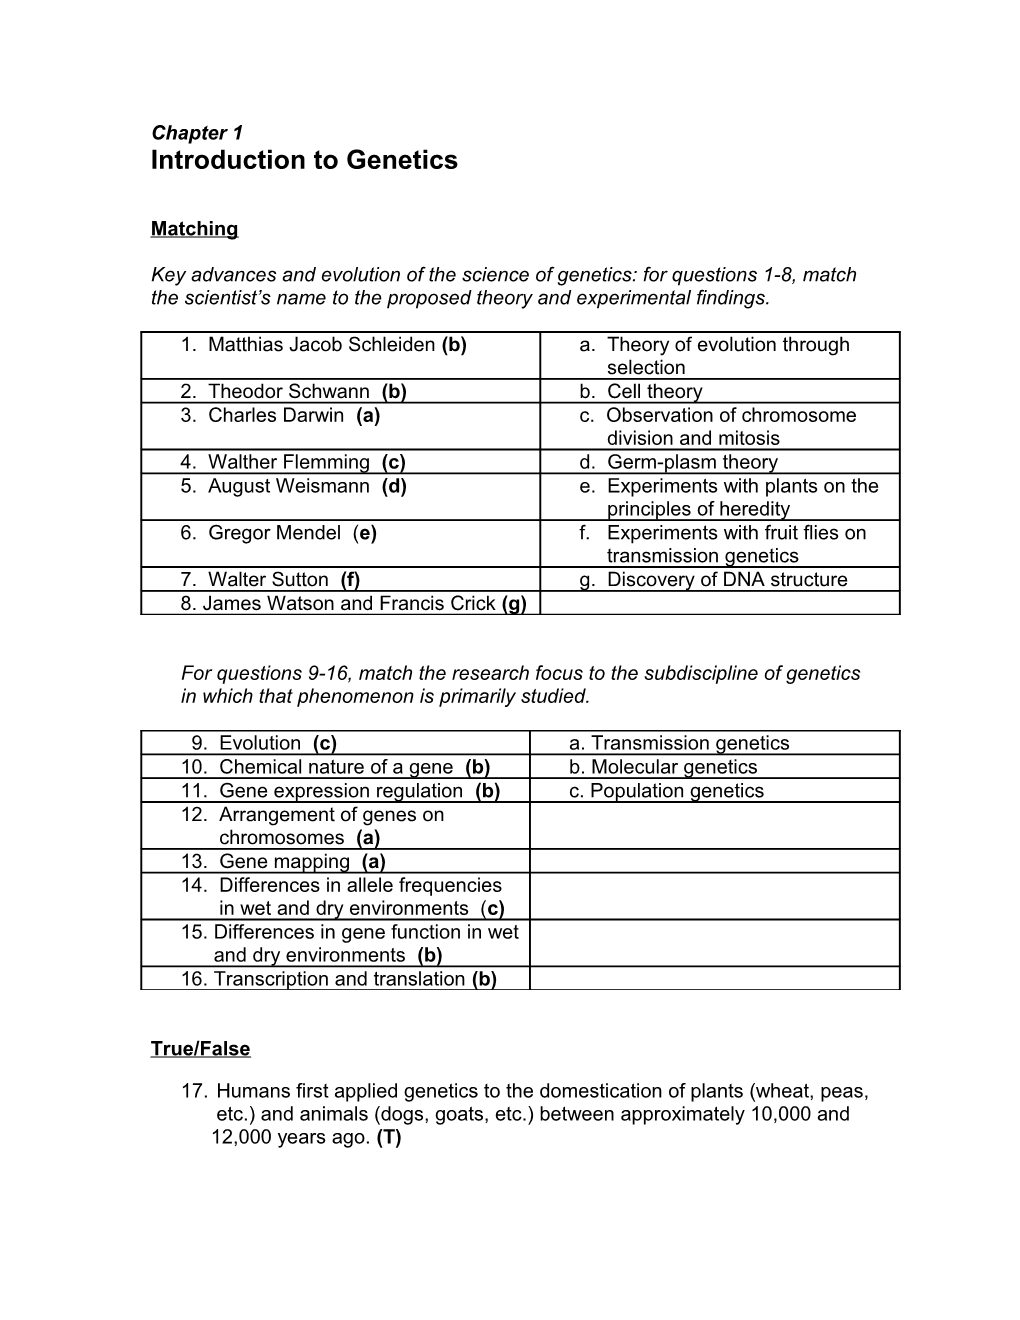 Pierce Genetics Testbank Questions: Chapter 1